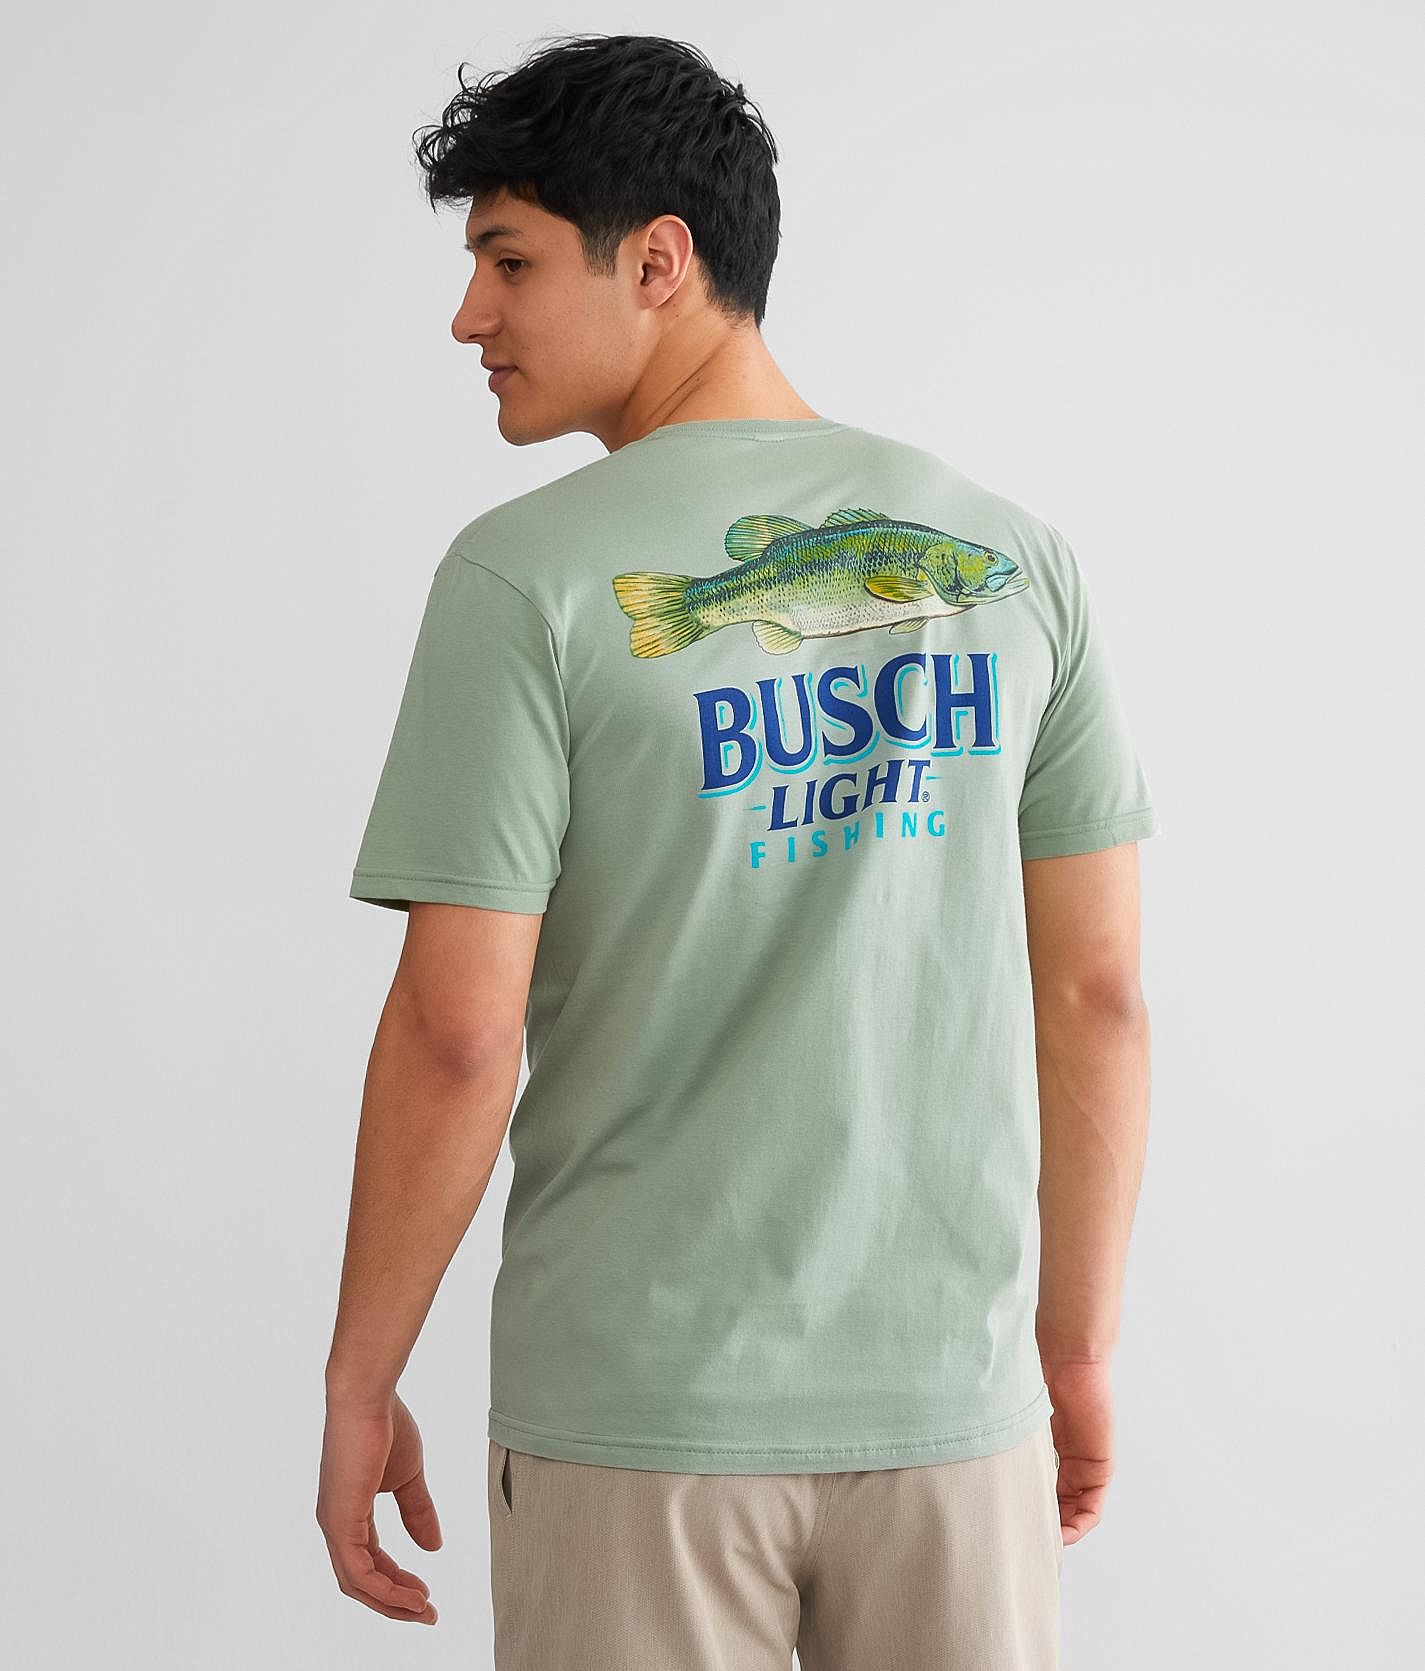 Buckle Junkfood Busch Light Hooked On Fishing T-Shirt